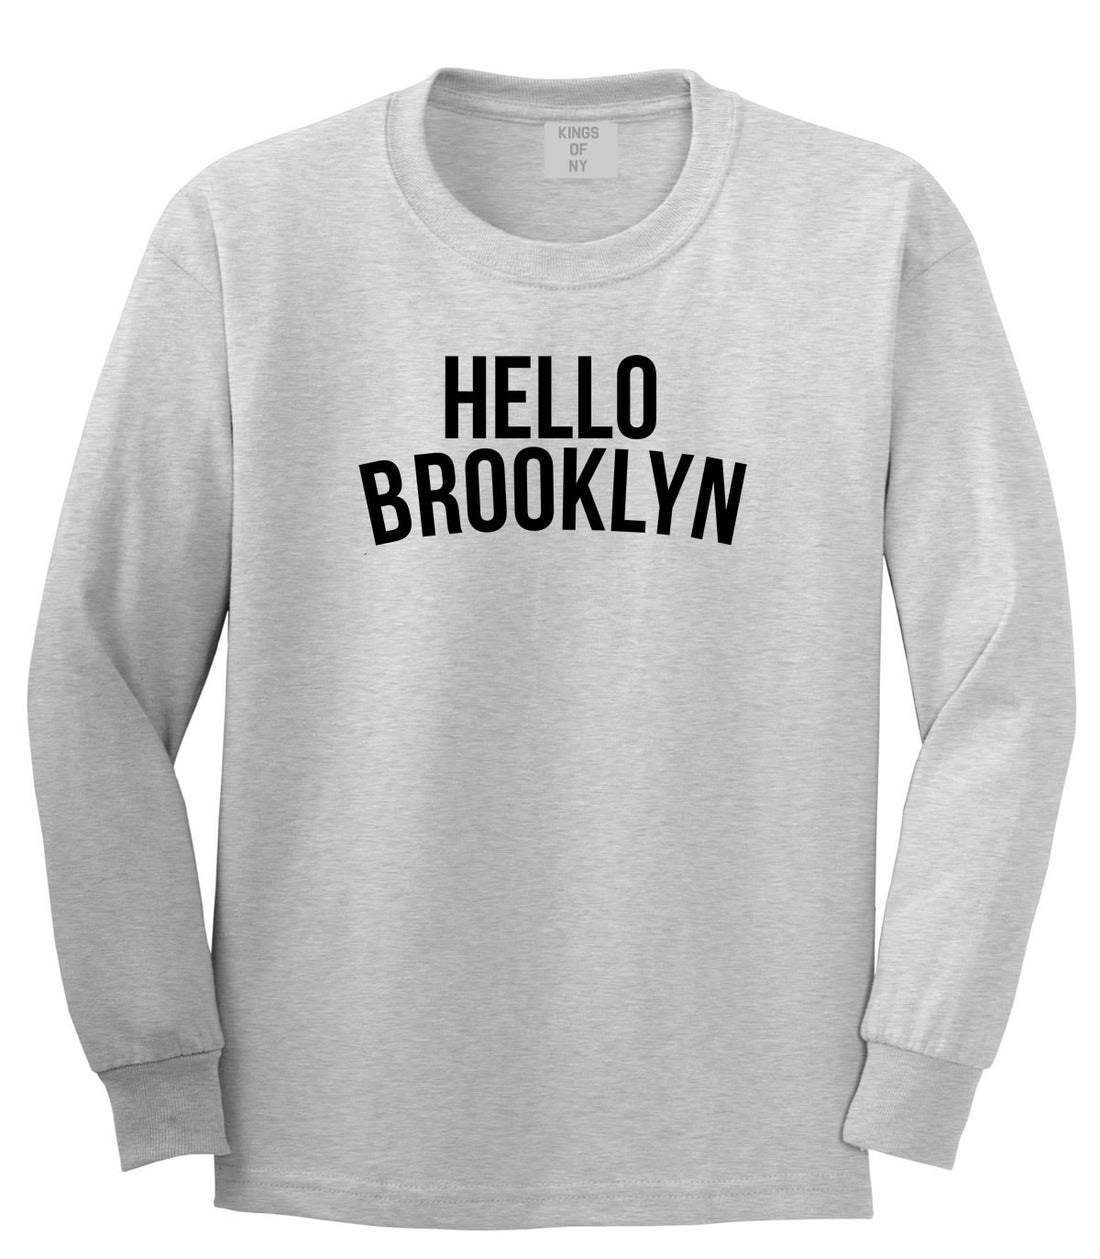 Hello Brooklyn Long Sleeve T-Shirt in Grey By Kings Of NY